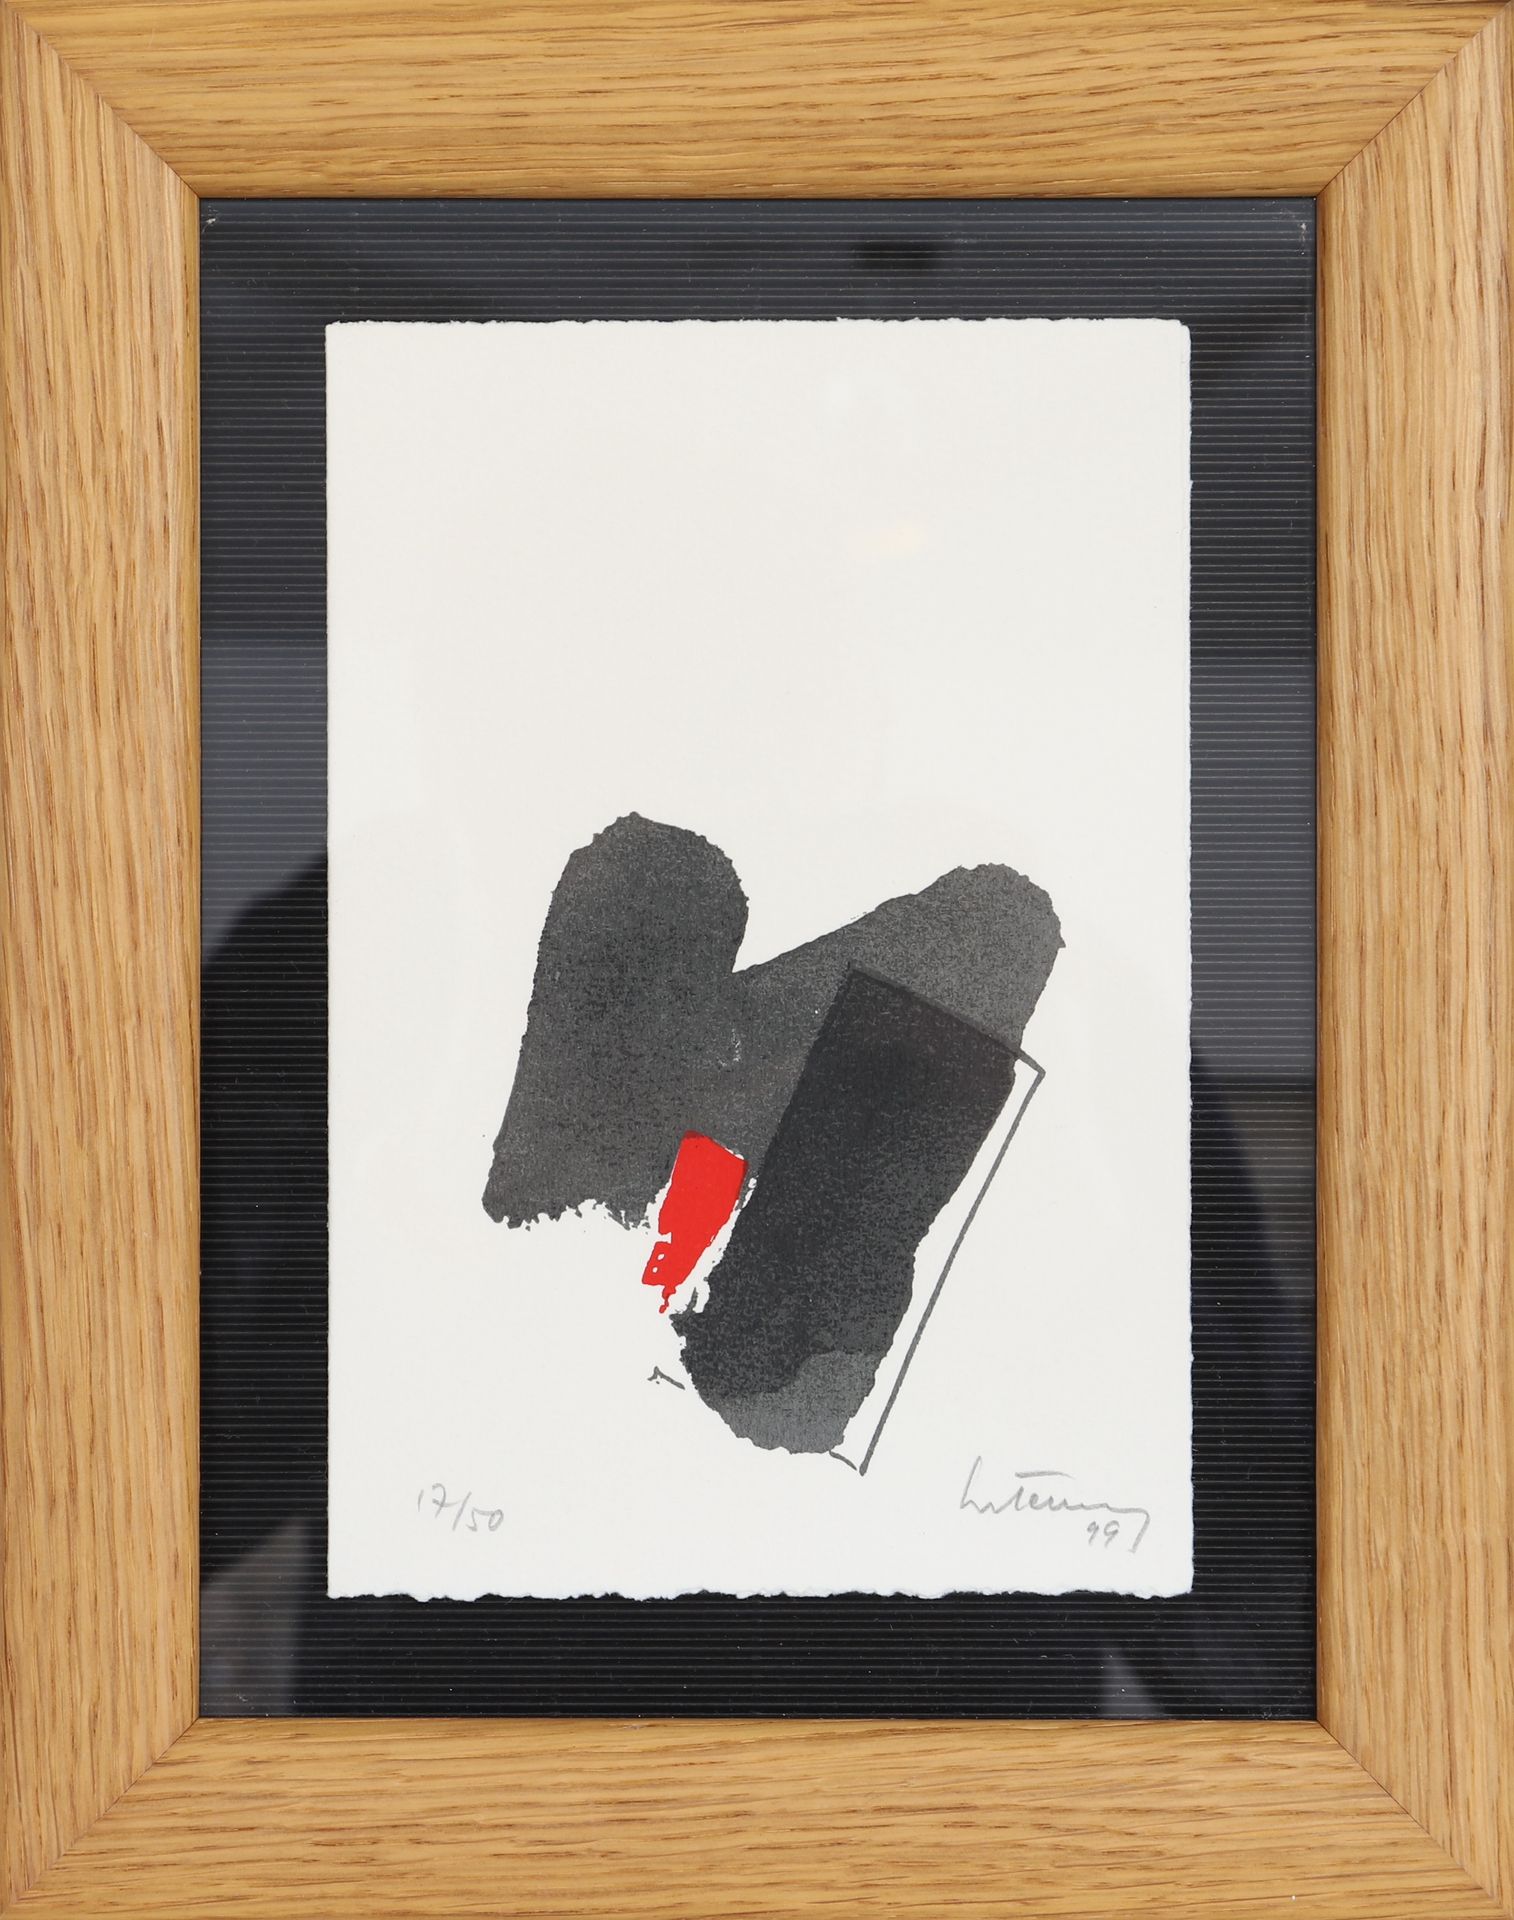 Null 罗杰-贝尔特梅斯（1927-2006） 
连环画，编号 17/50
版上有铅笔签名和日期 99
带框尺寸：高：33；宽：26 厘米